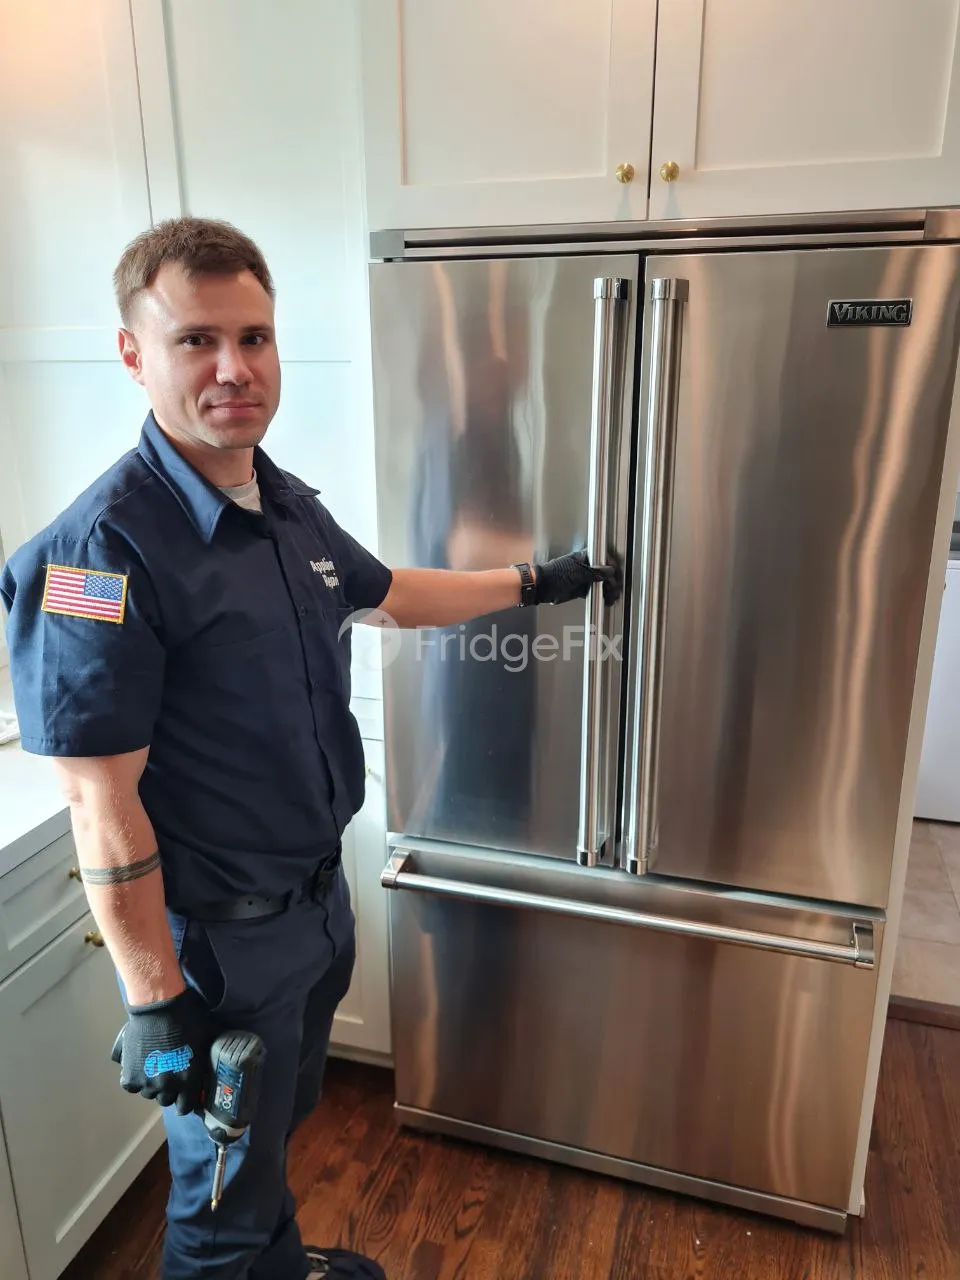 Top Refrigerator & Freezer Repair in OC - Sub Zero, Viking, GE & More